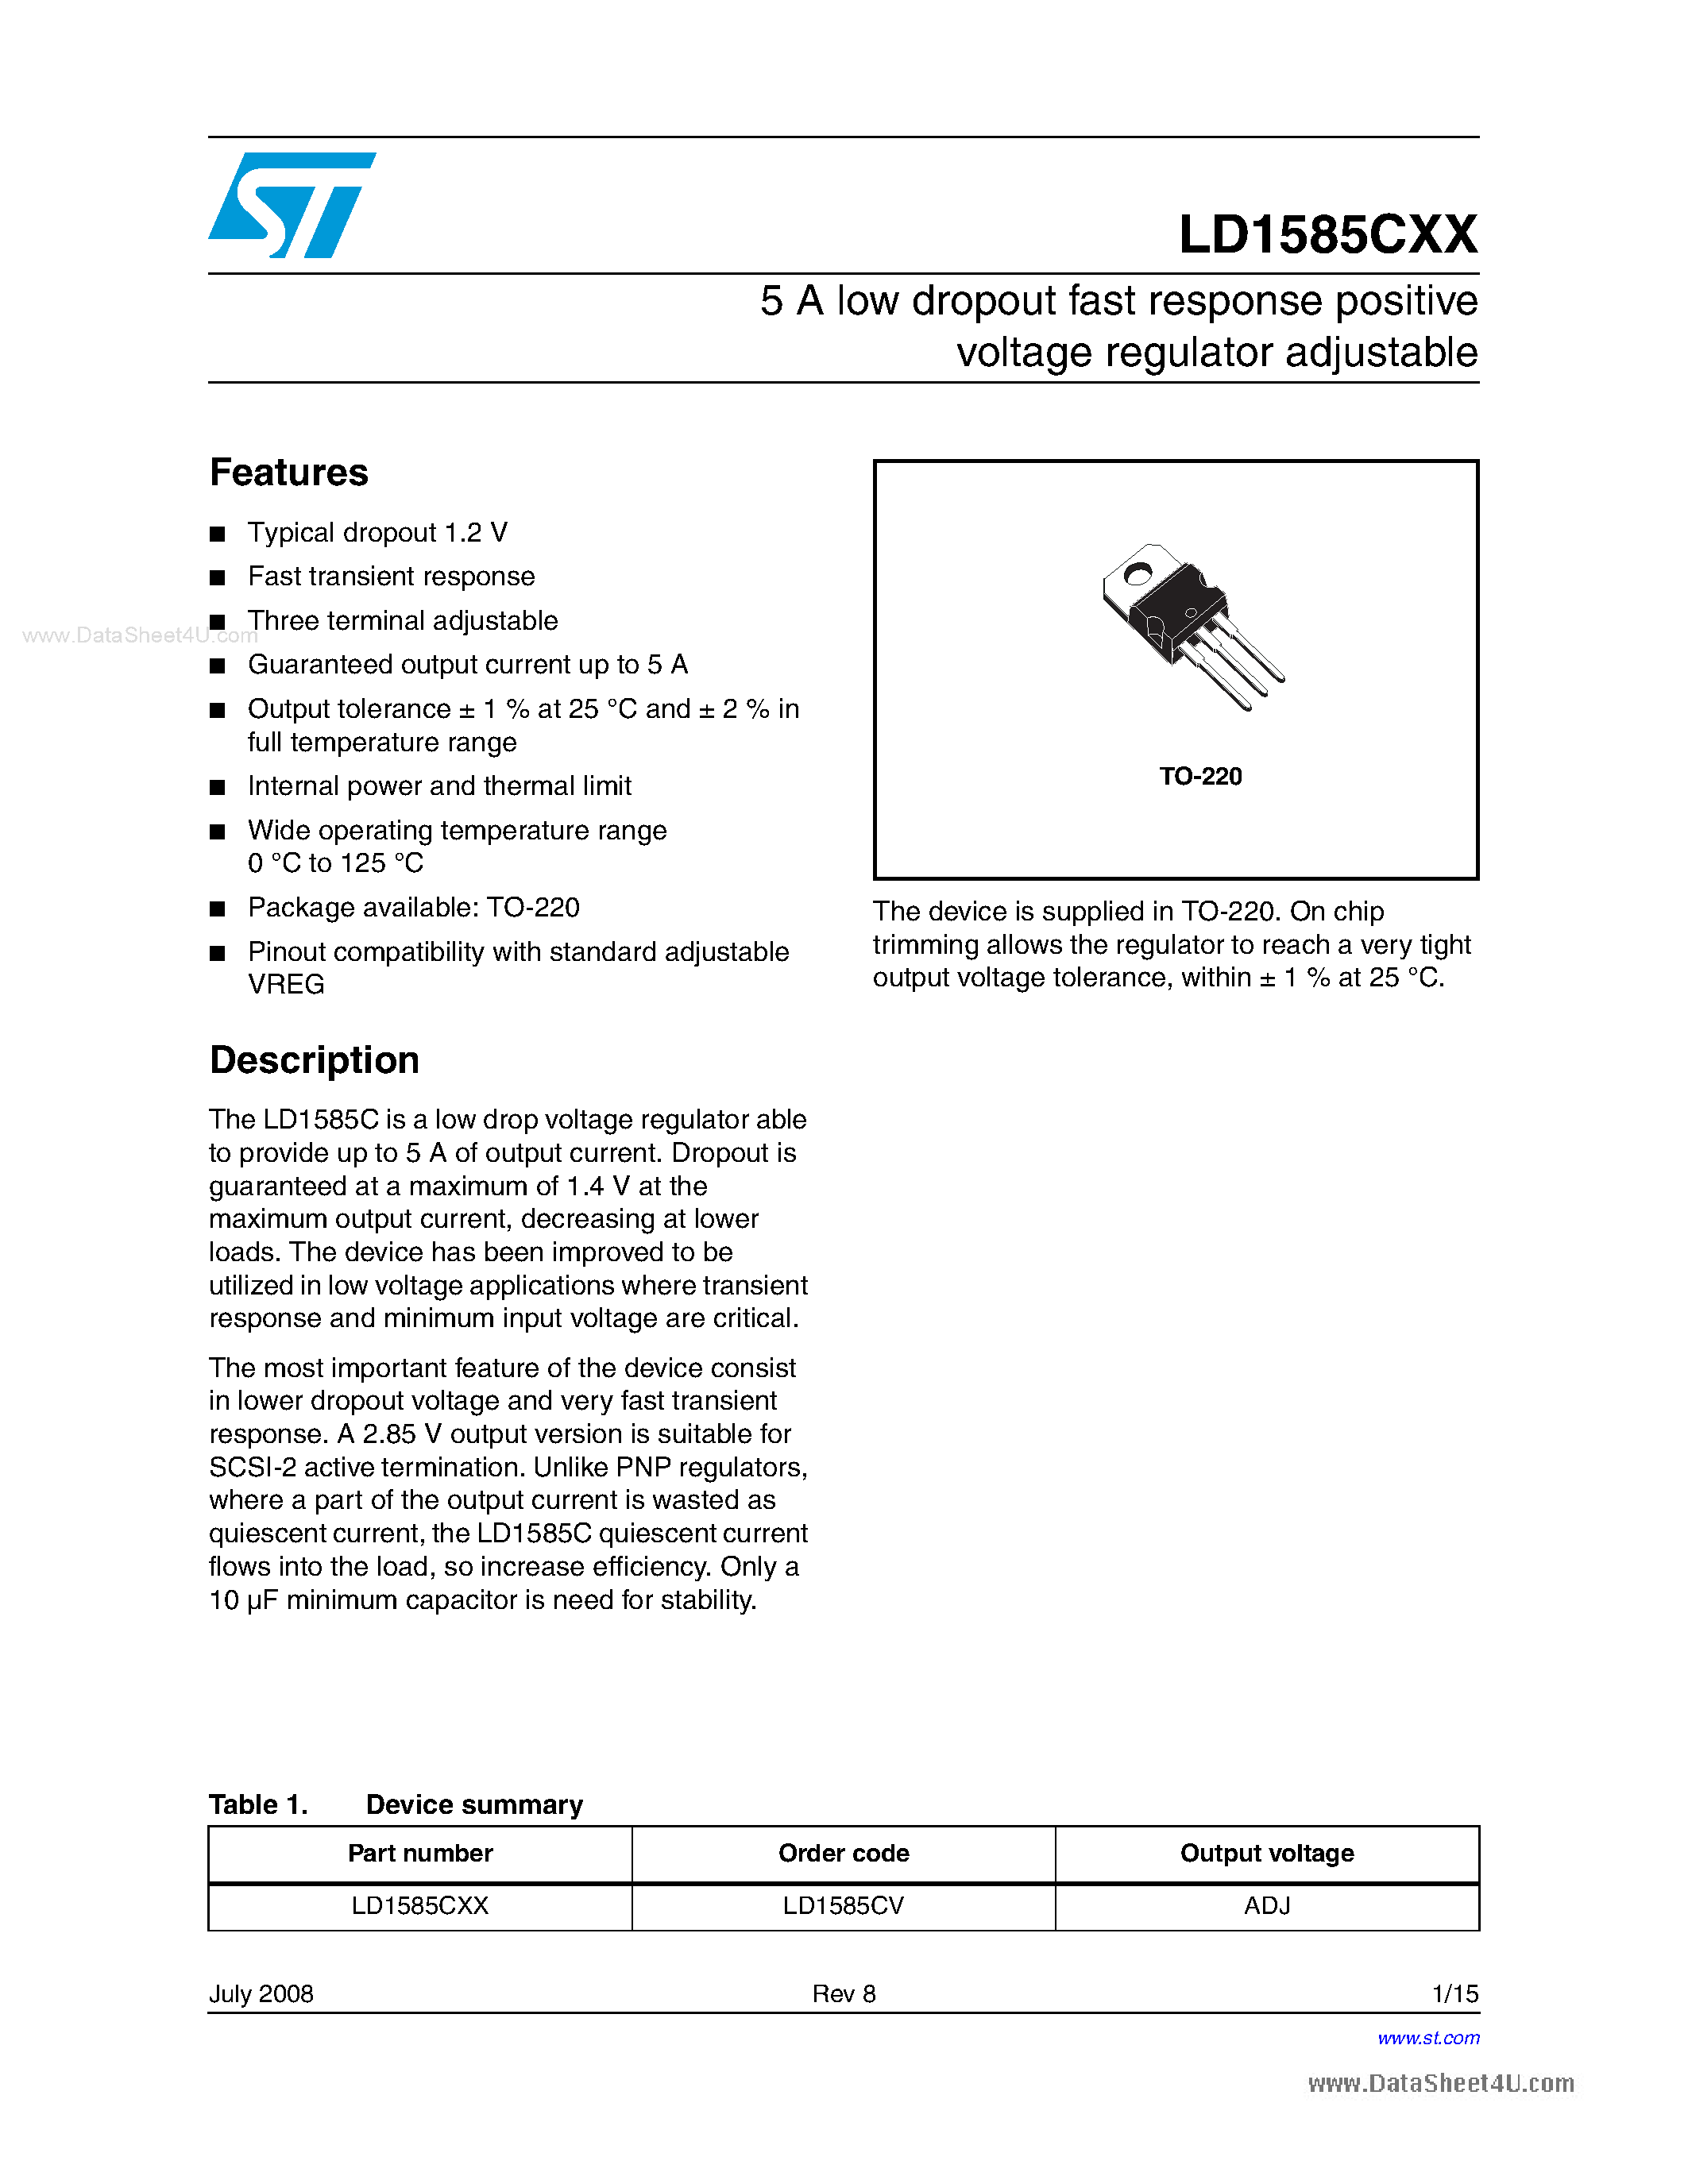 Даташит LD1585CXX-5A low dropout fast response positive voltage regulator adjustable страница 1